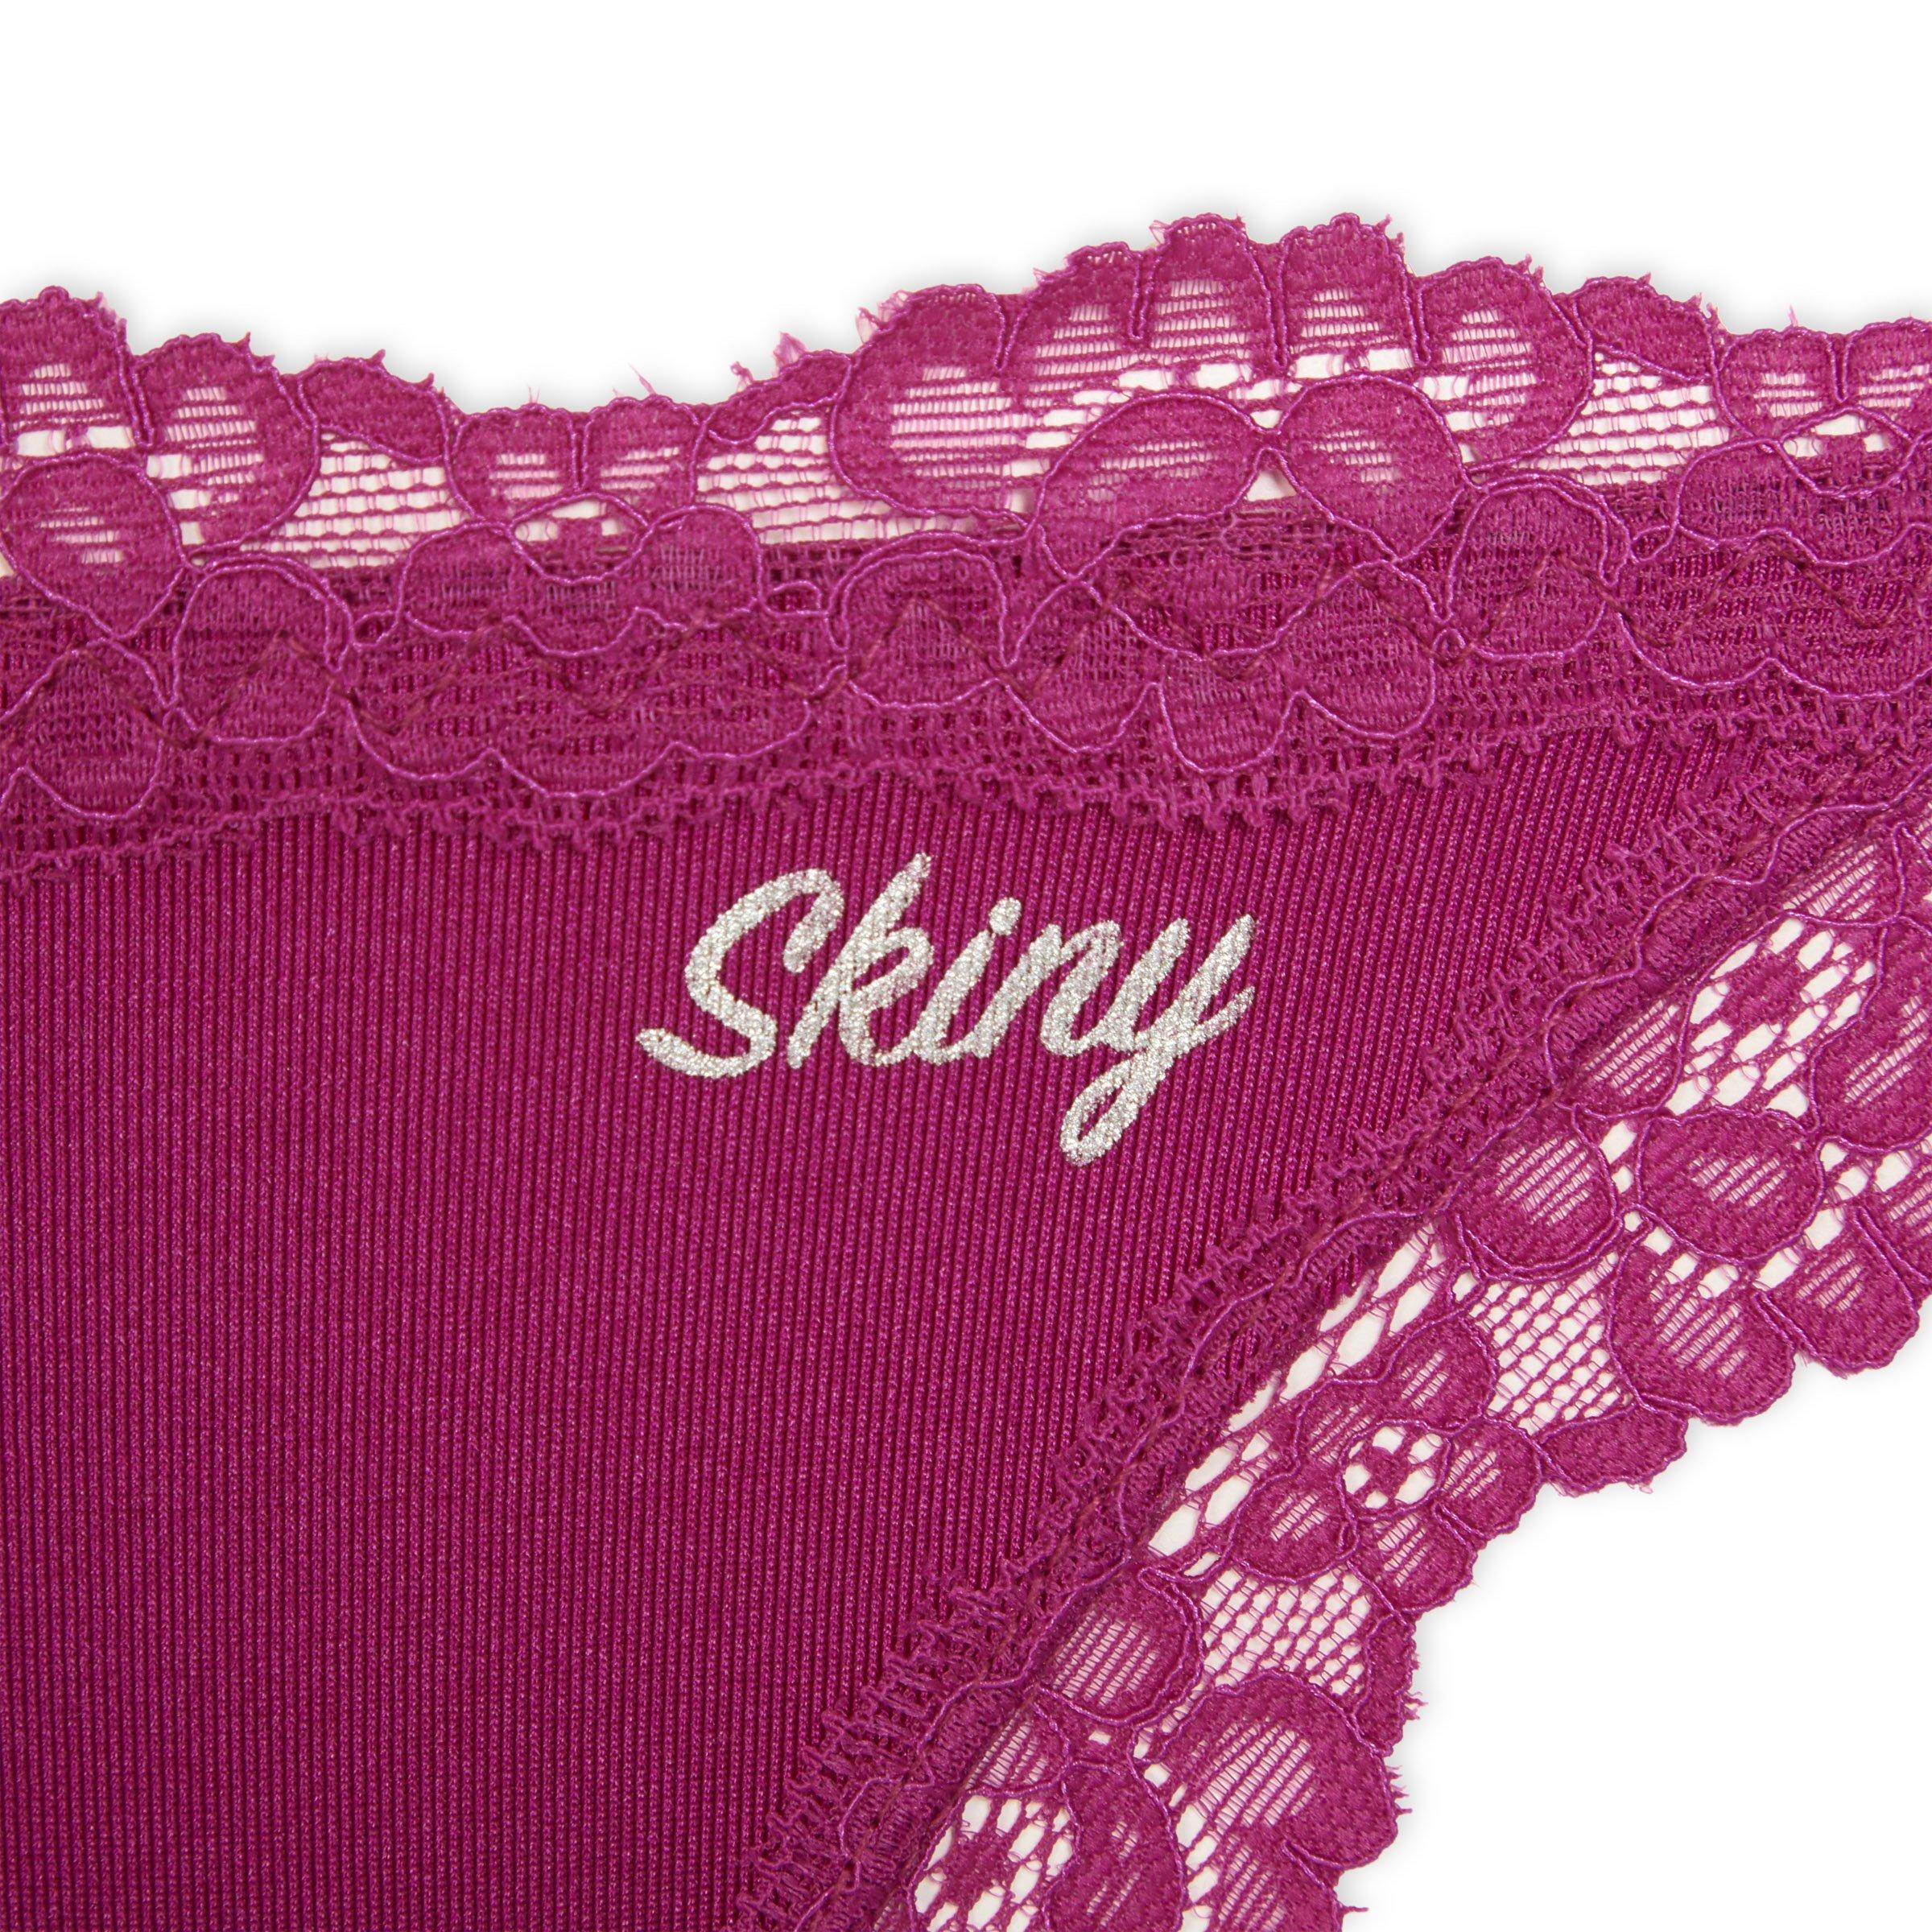 Buy Penti Multipack Lacy Detail Brazilian Panties in Multi 2024 Online